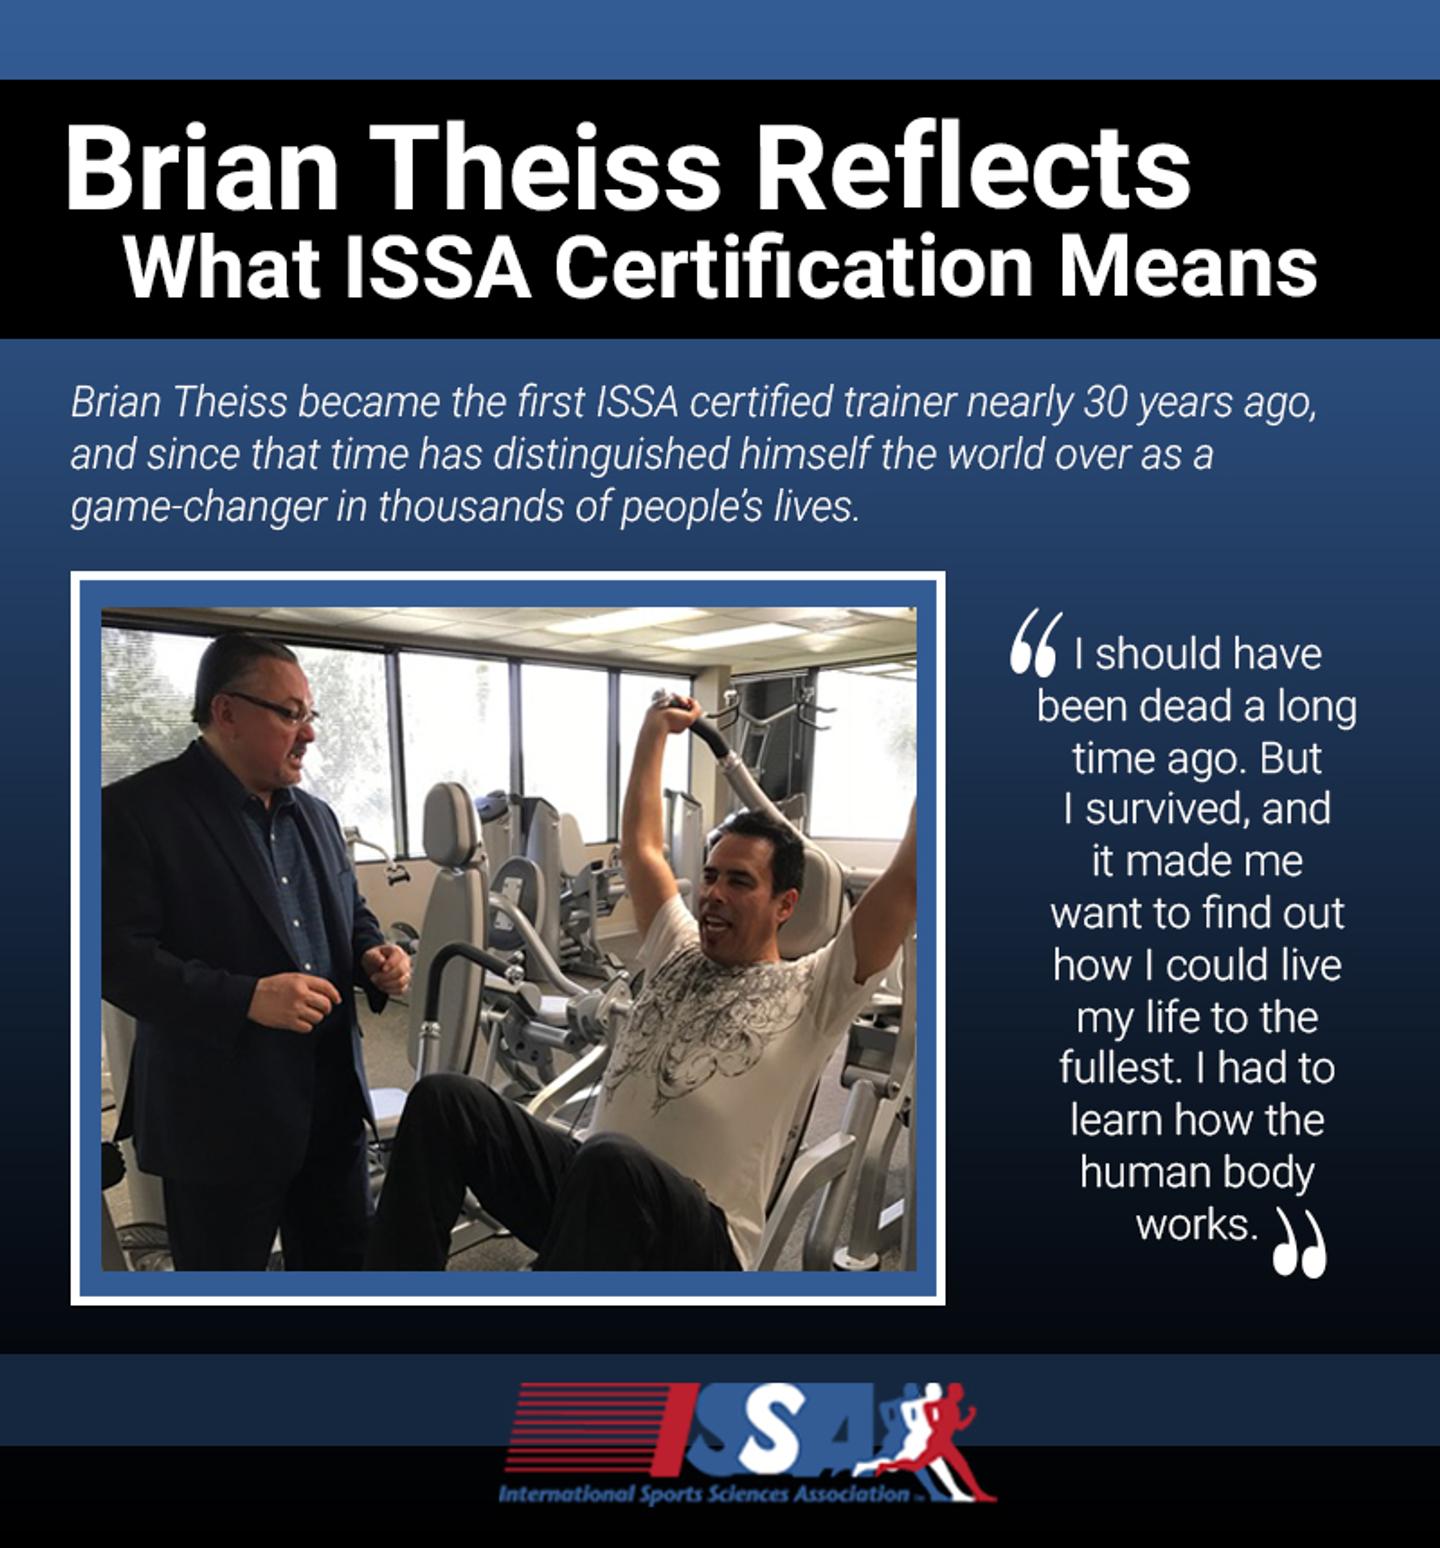 ISSA, International Sports Sciences Association, Certified Personal Trainer, ISSAonline, Brian Theiss, What ISSA Certification Means to Brian Theiss 